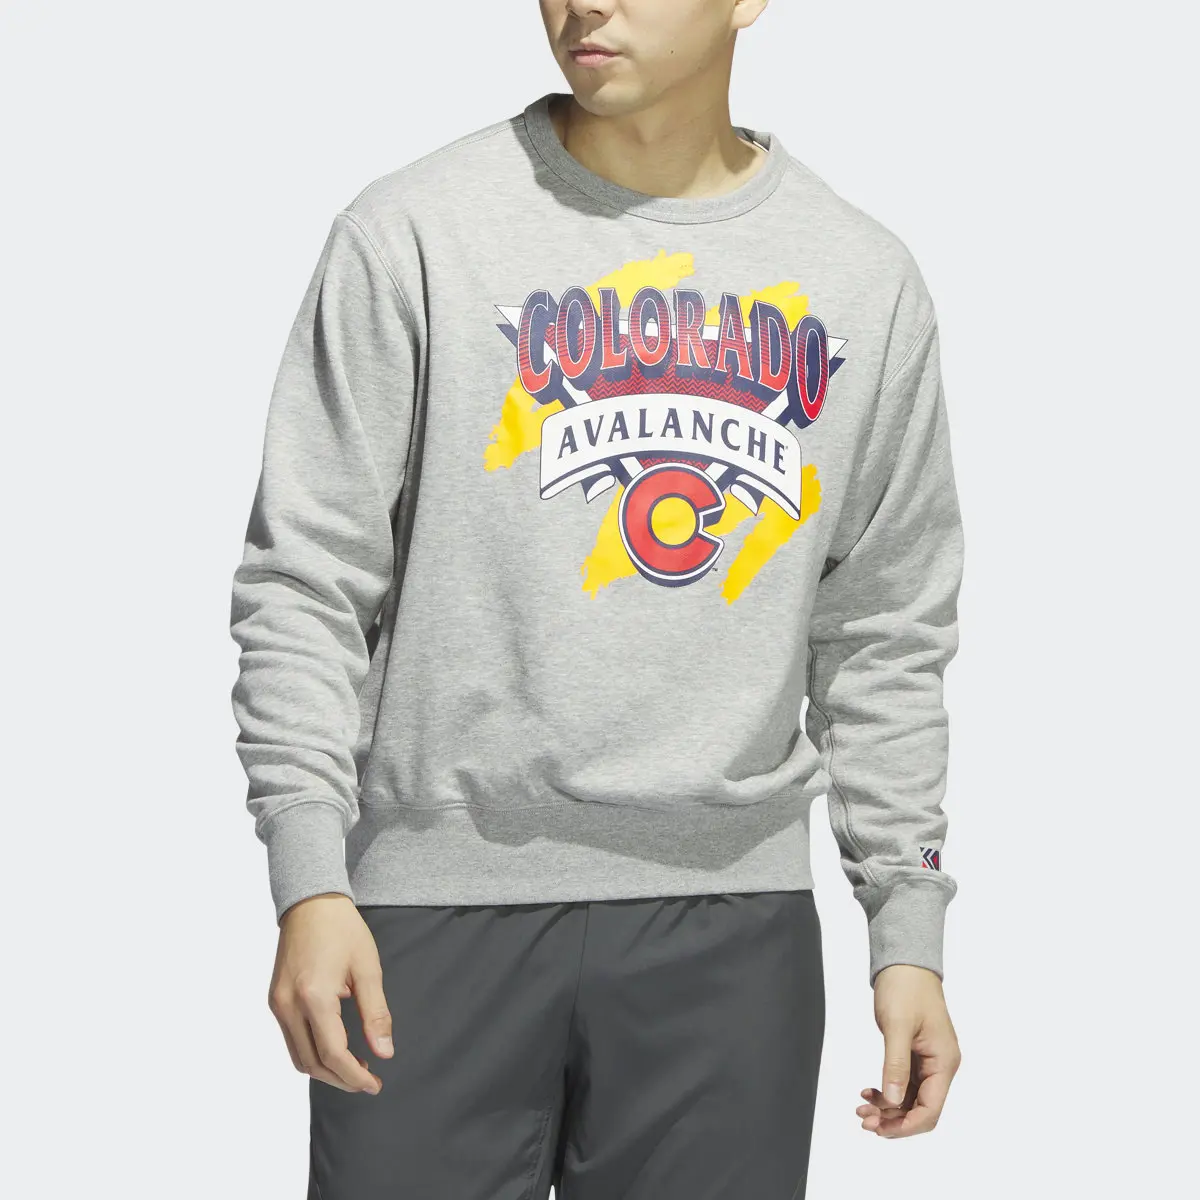 Adidas Avalanche Vintage Crew Sweatshirt. 1